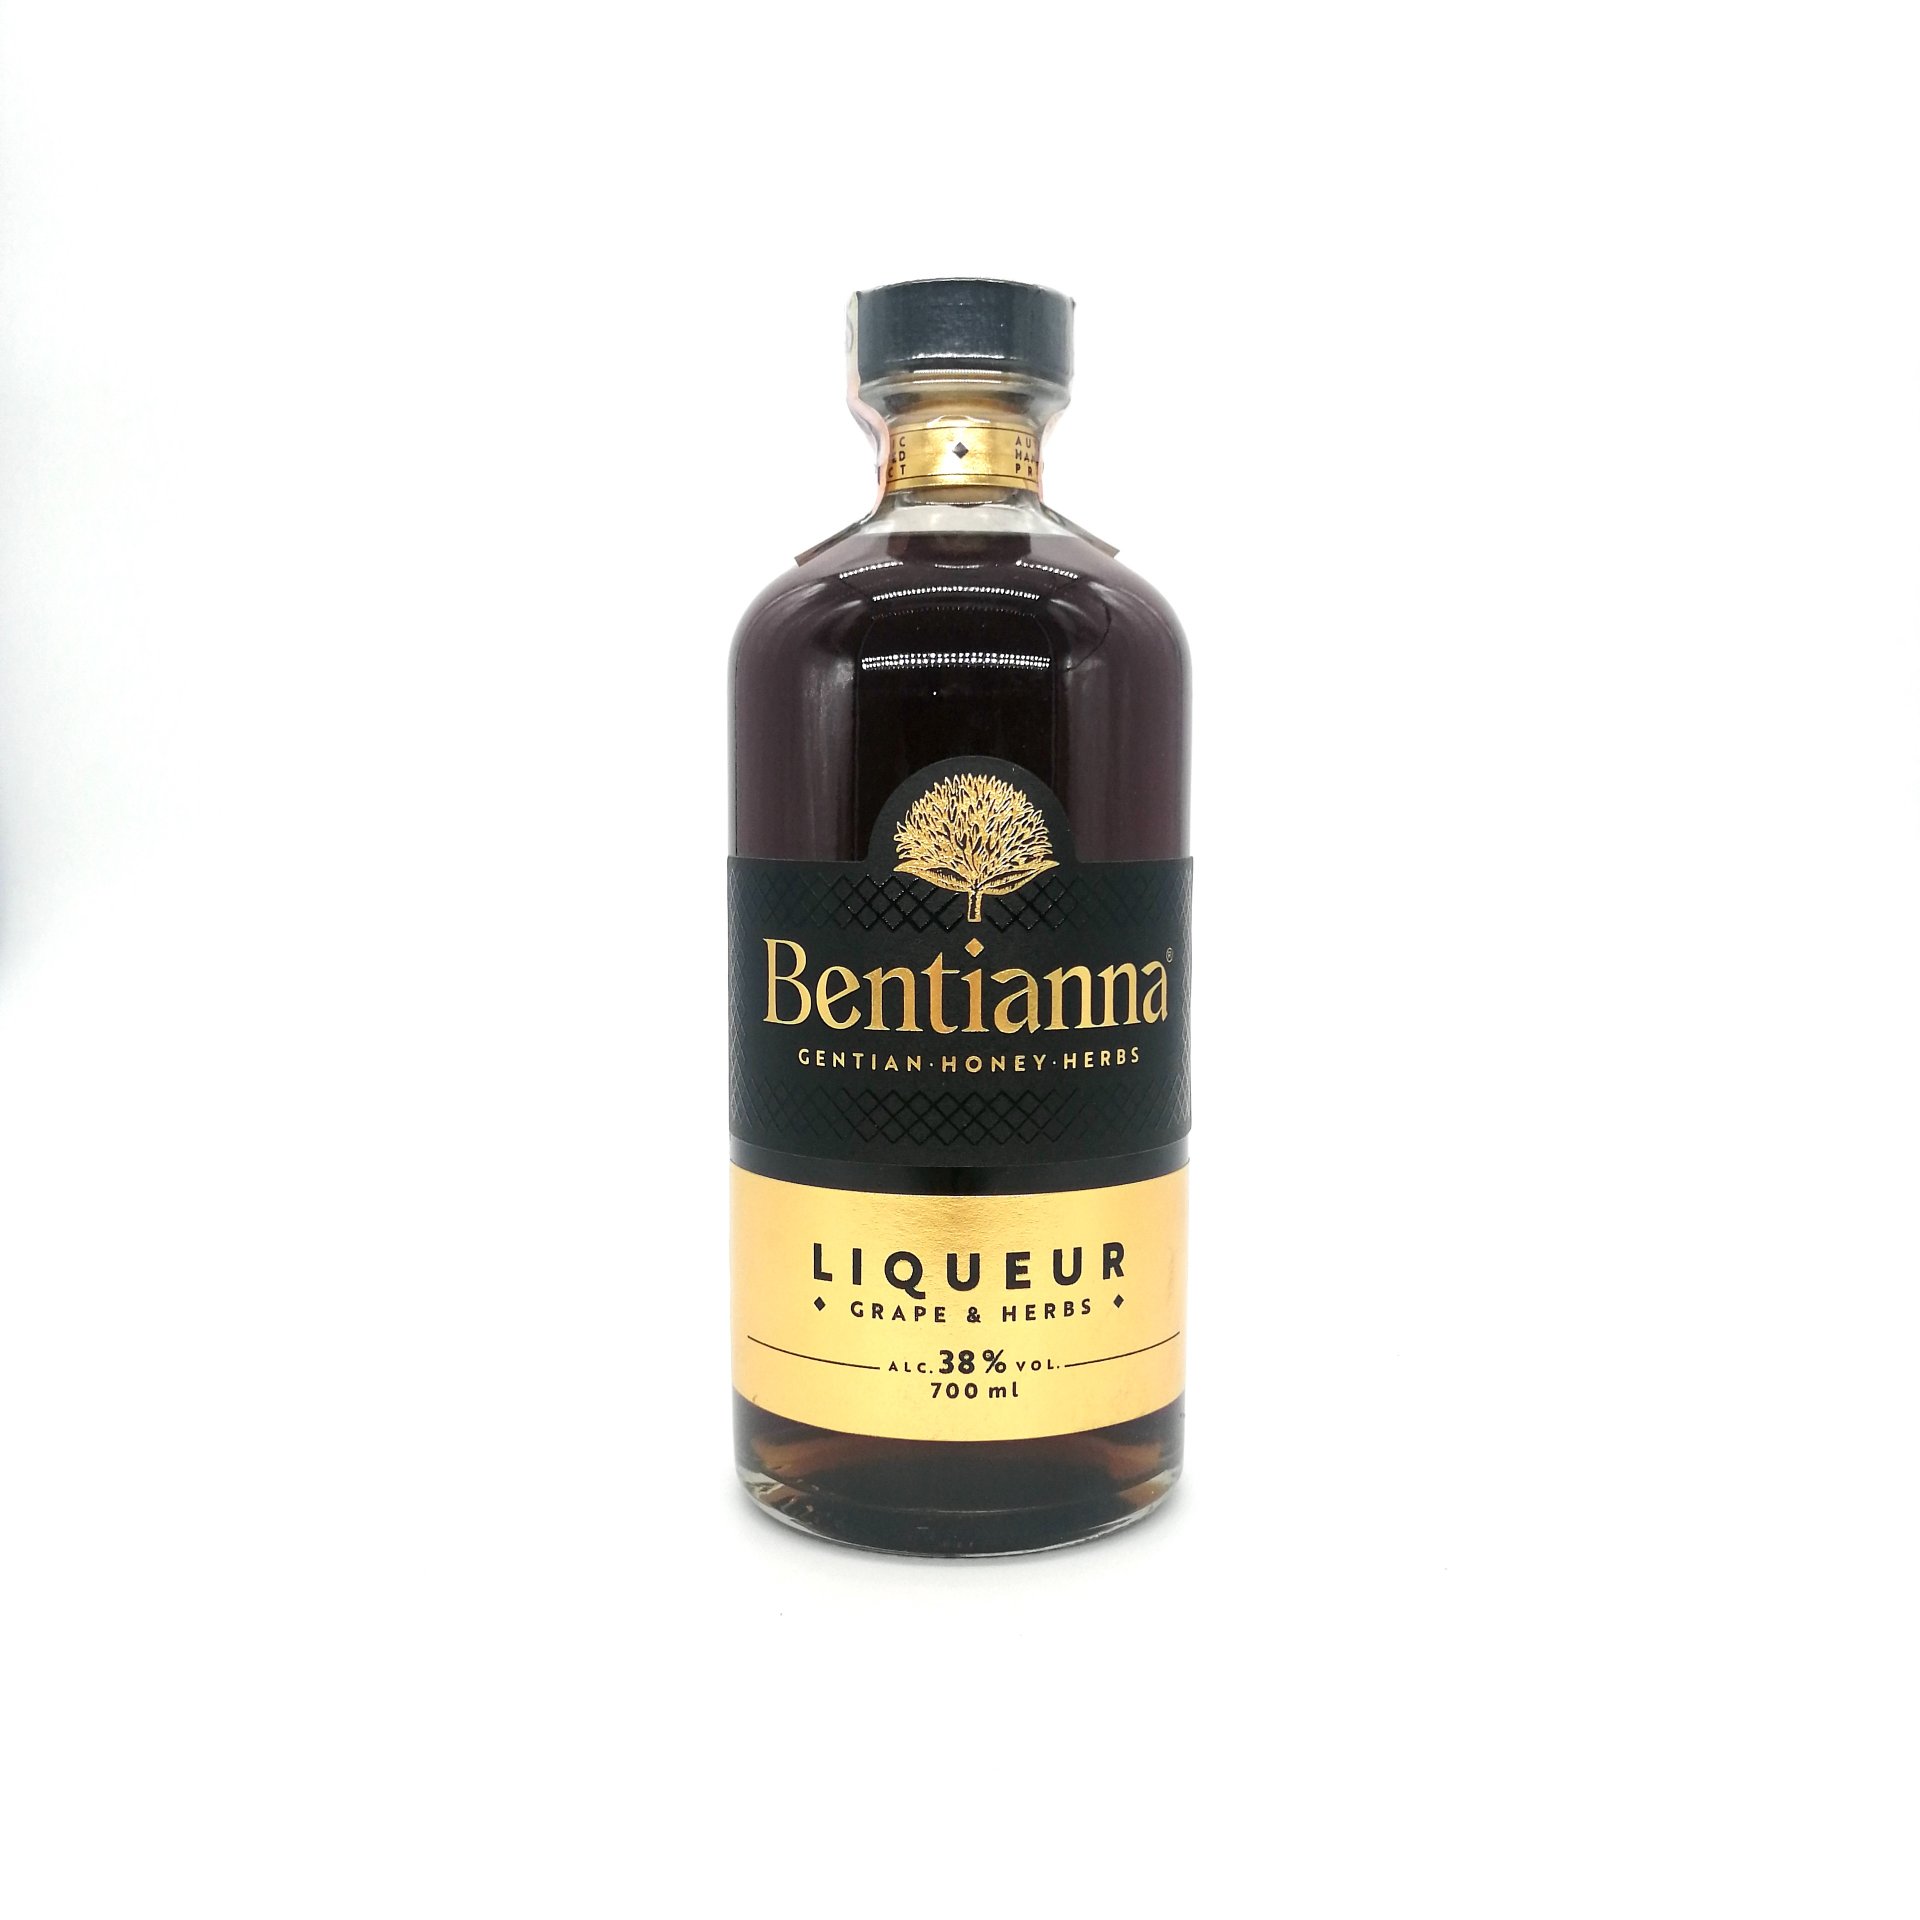 Bentianna liqueur 38% 700ml